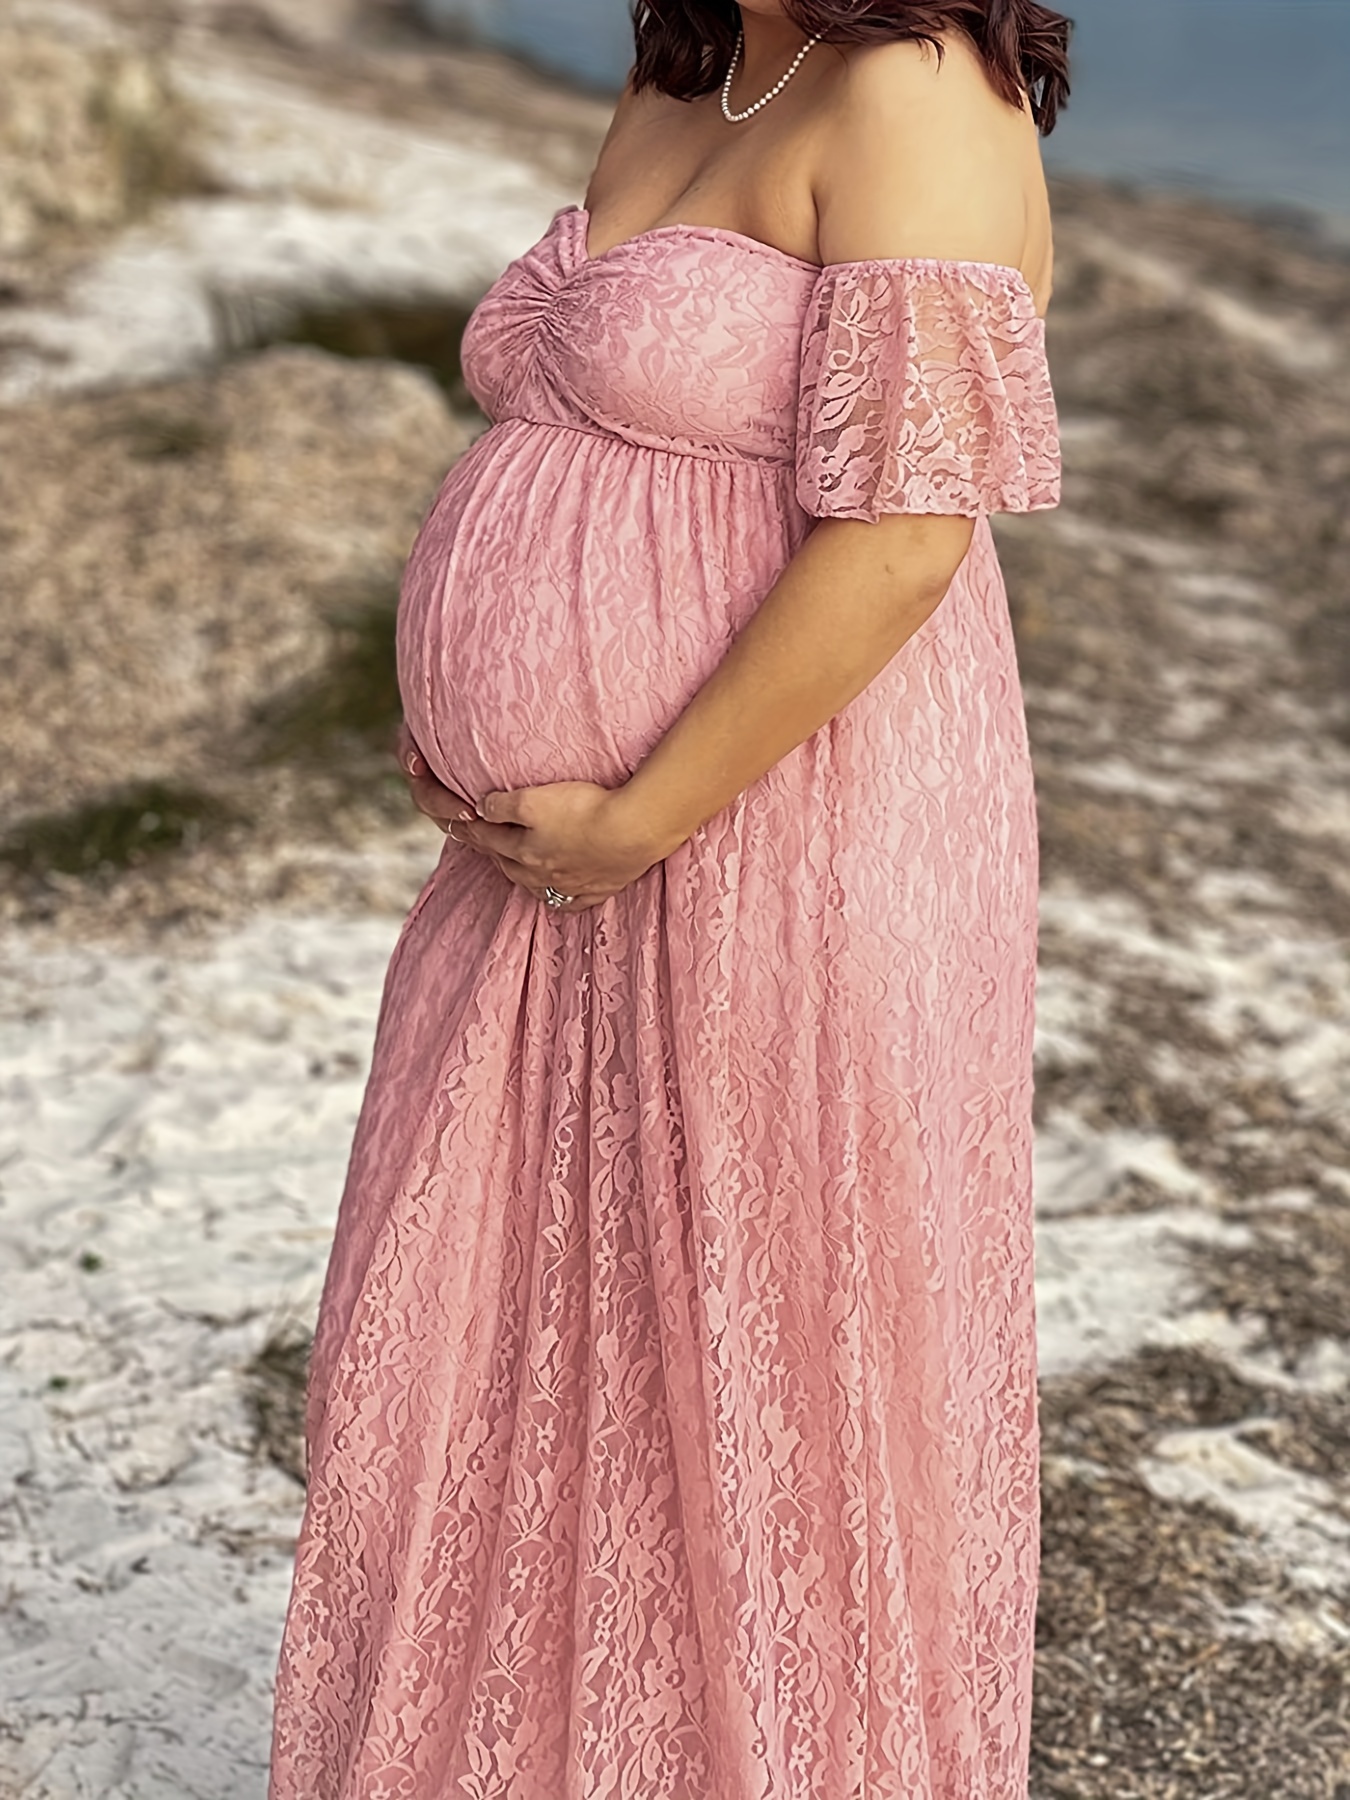 Long Maternity Dresses